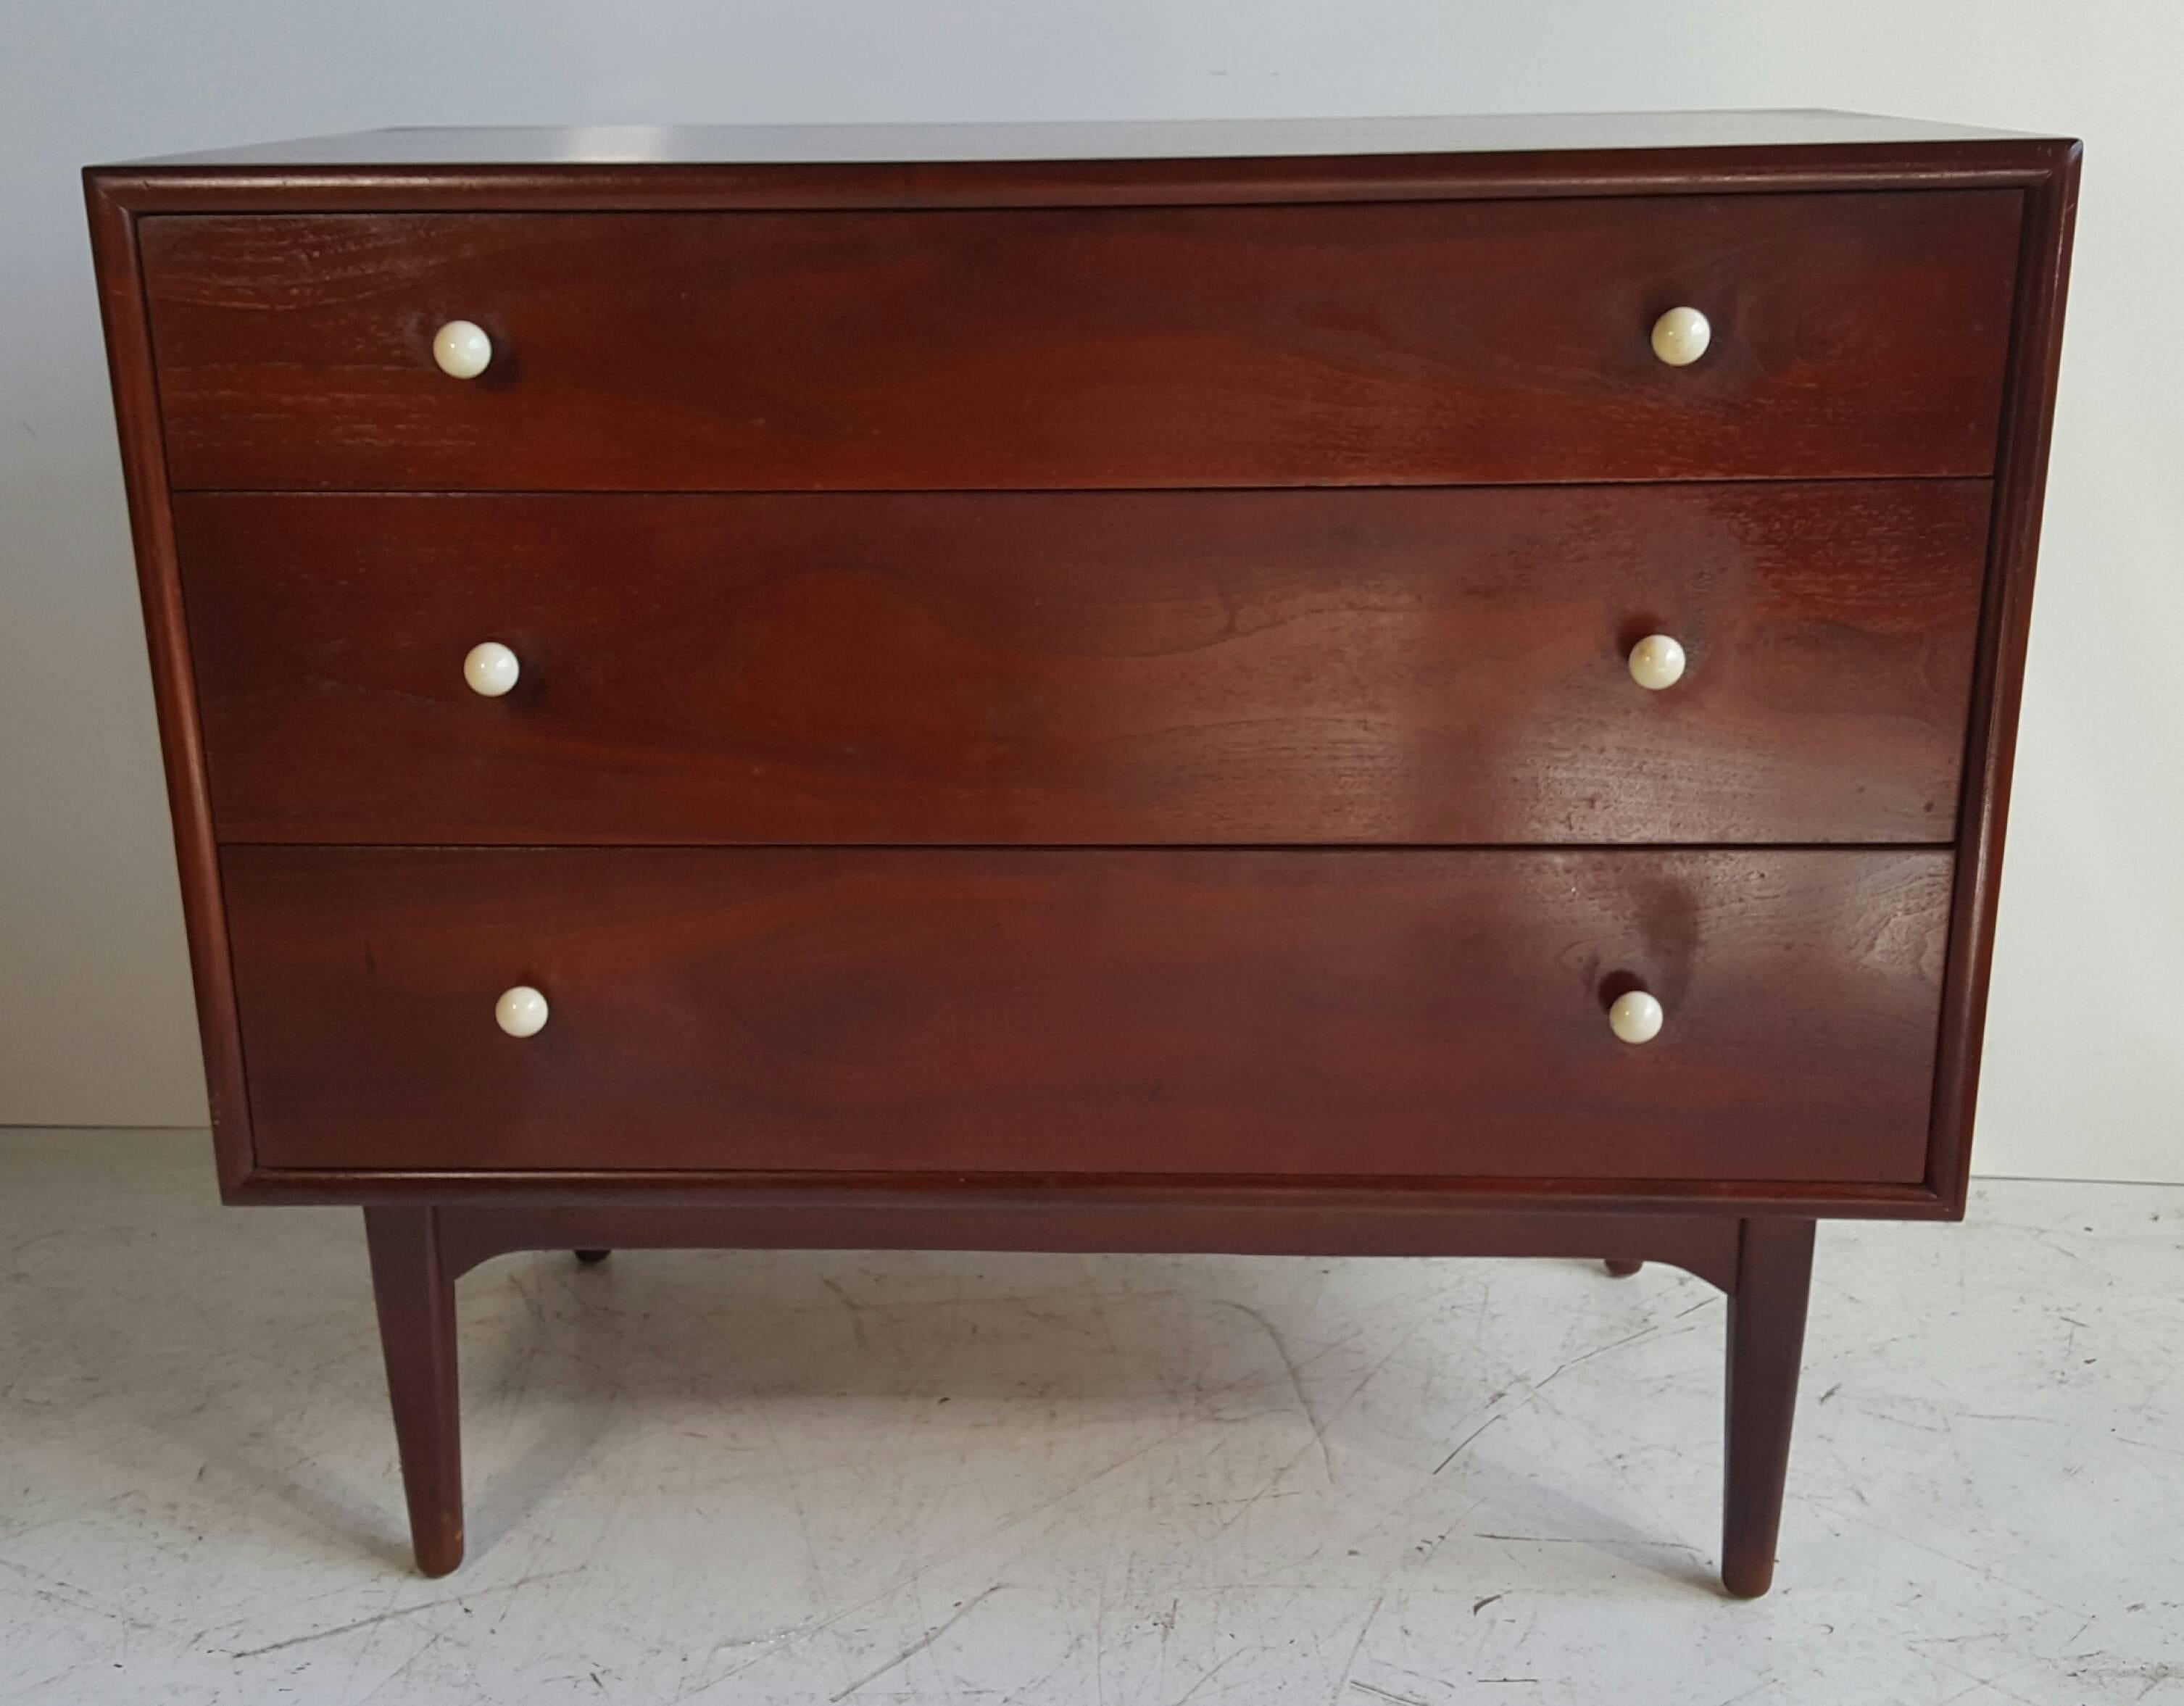 Classic Mid-Century Modern three-drawer chest designed by Kipp Stewart, part of Drexel's Declaration line. Solid walnut, superior quality and construction. Wonderful sleek, elegant, simple styling.